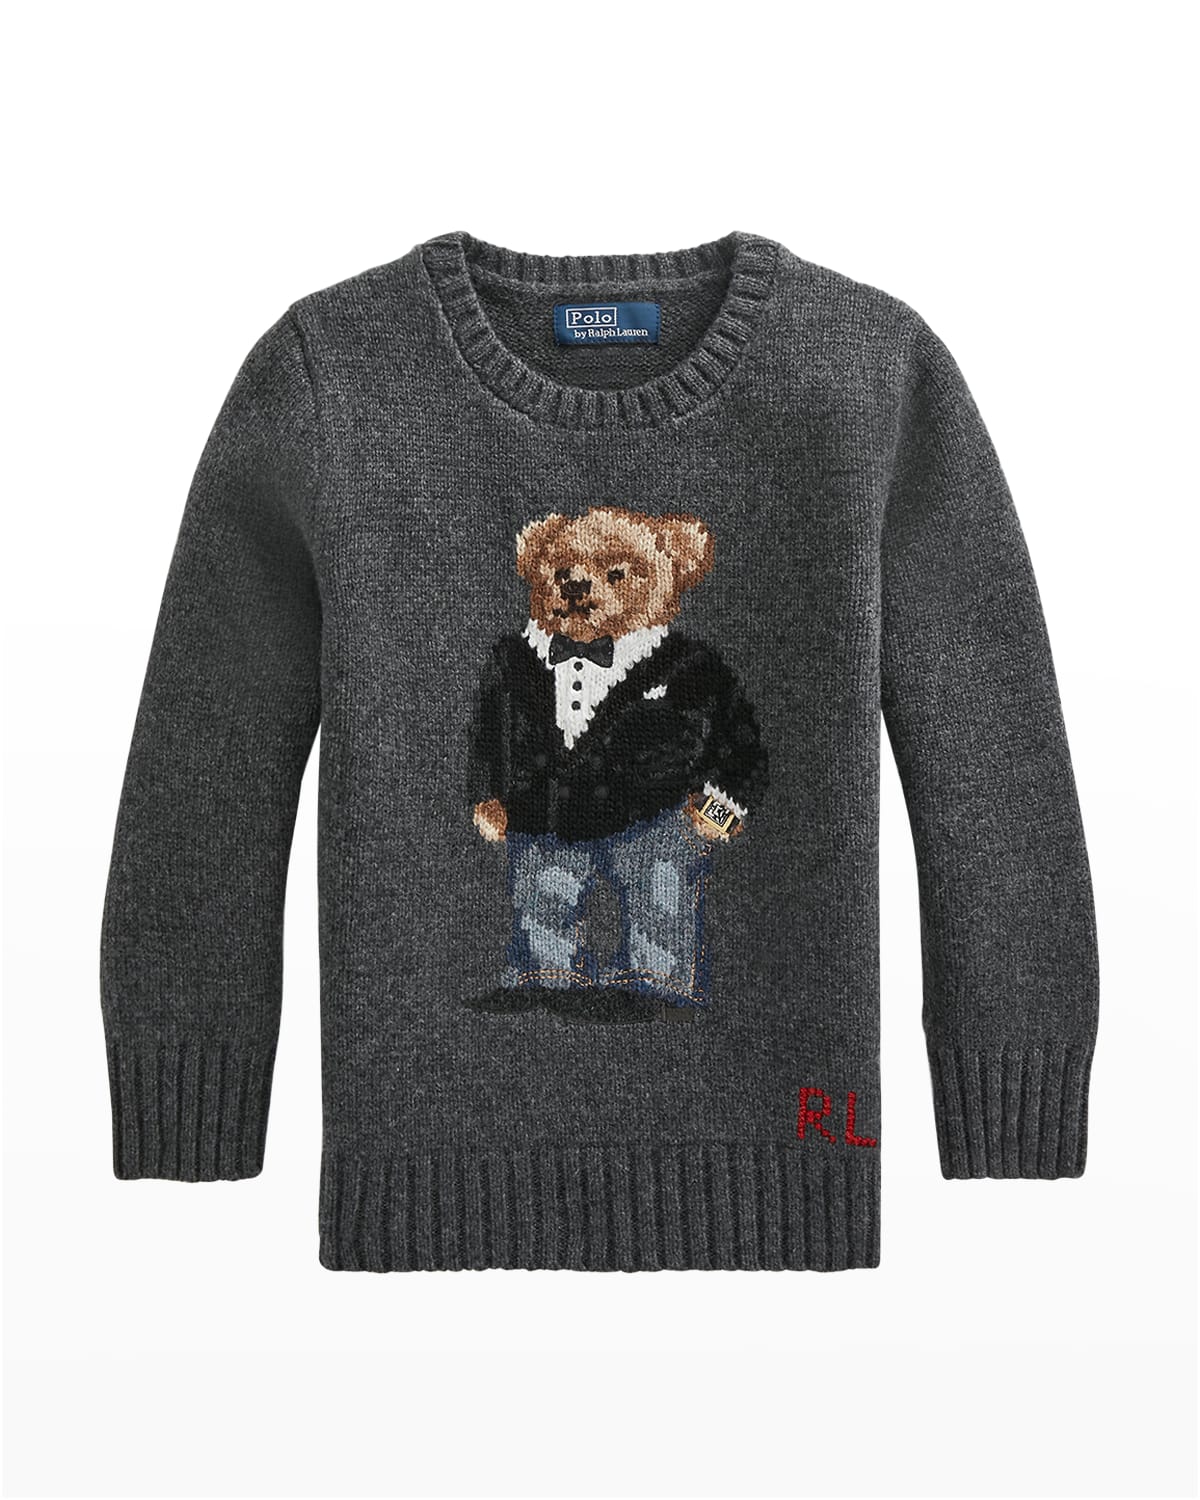 Bear Knitted Sweater Jumper Long Sleeve